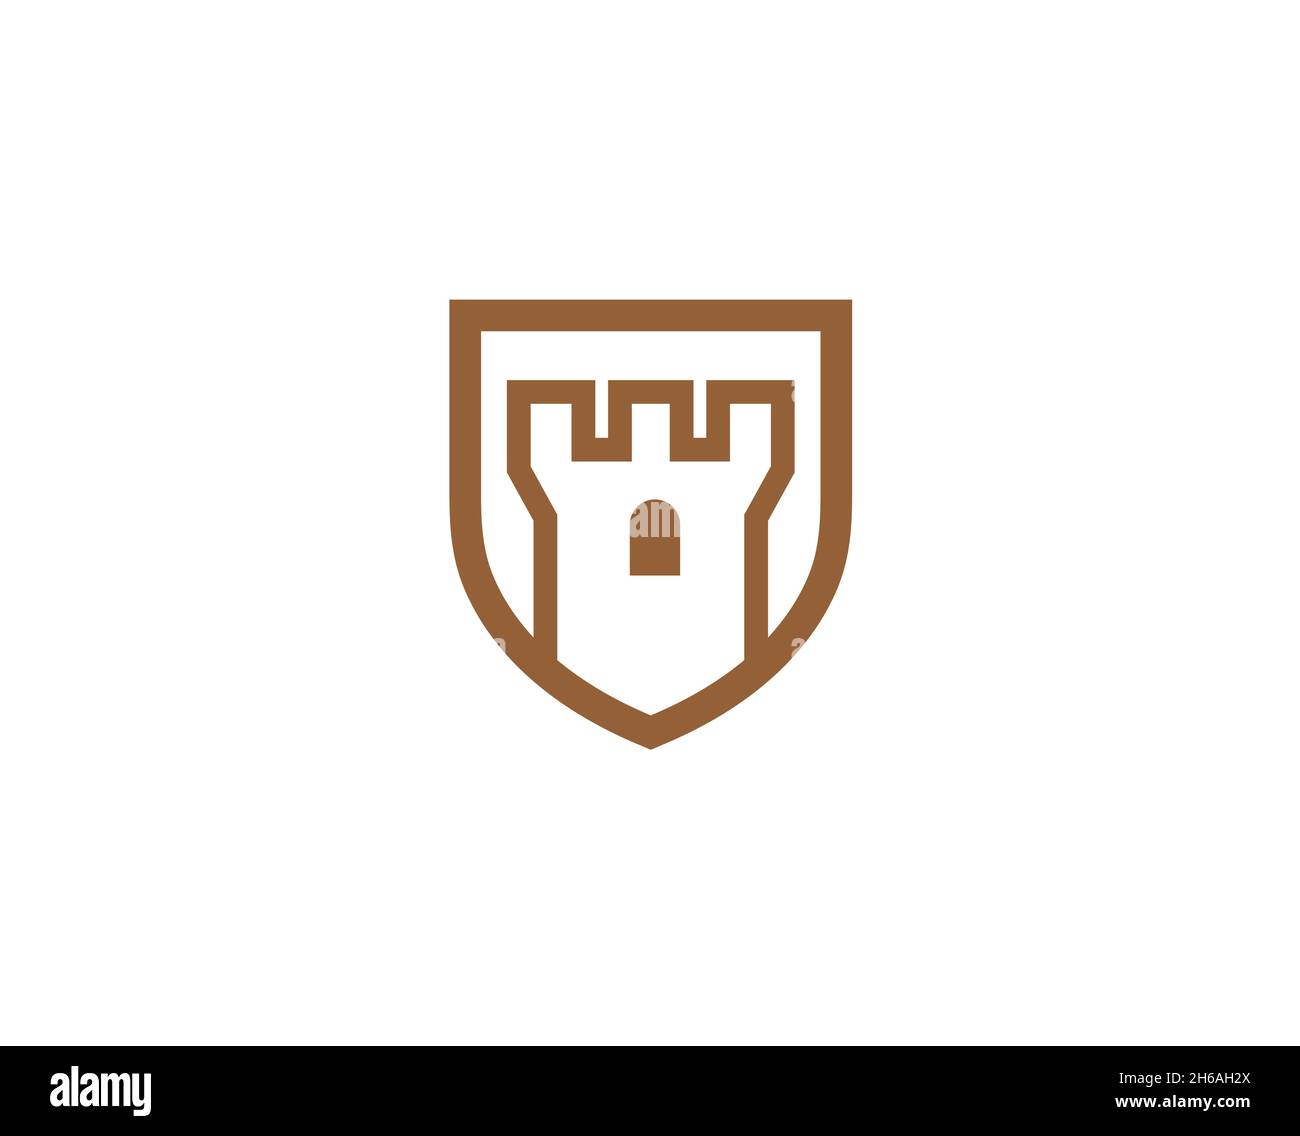 Creative Shield Castle Logo Design Illustrazione di simboli vettoriali Illustrazione Vettoriale